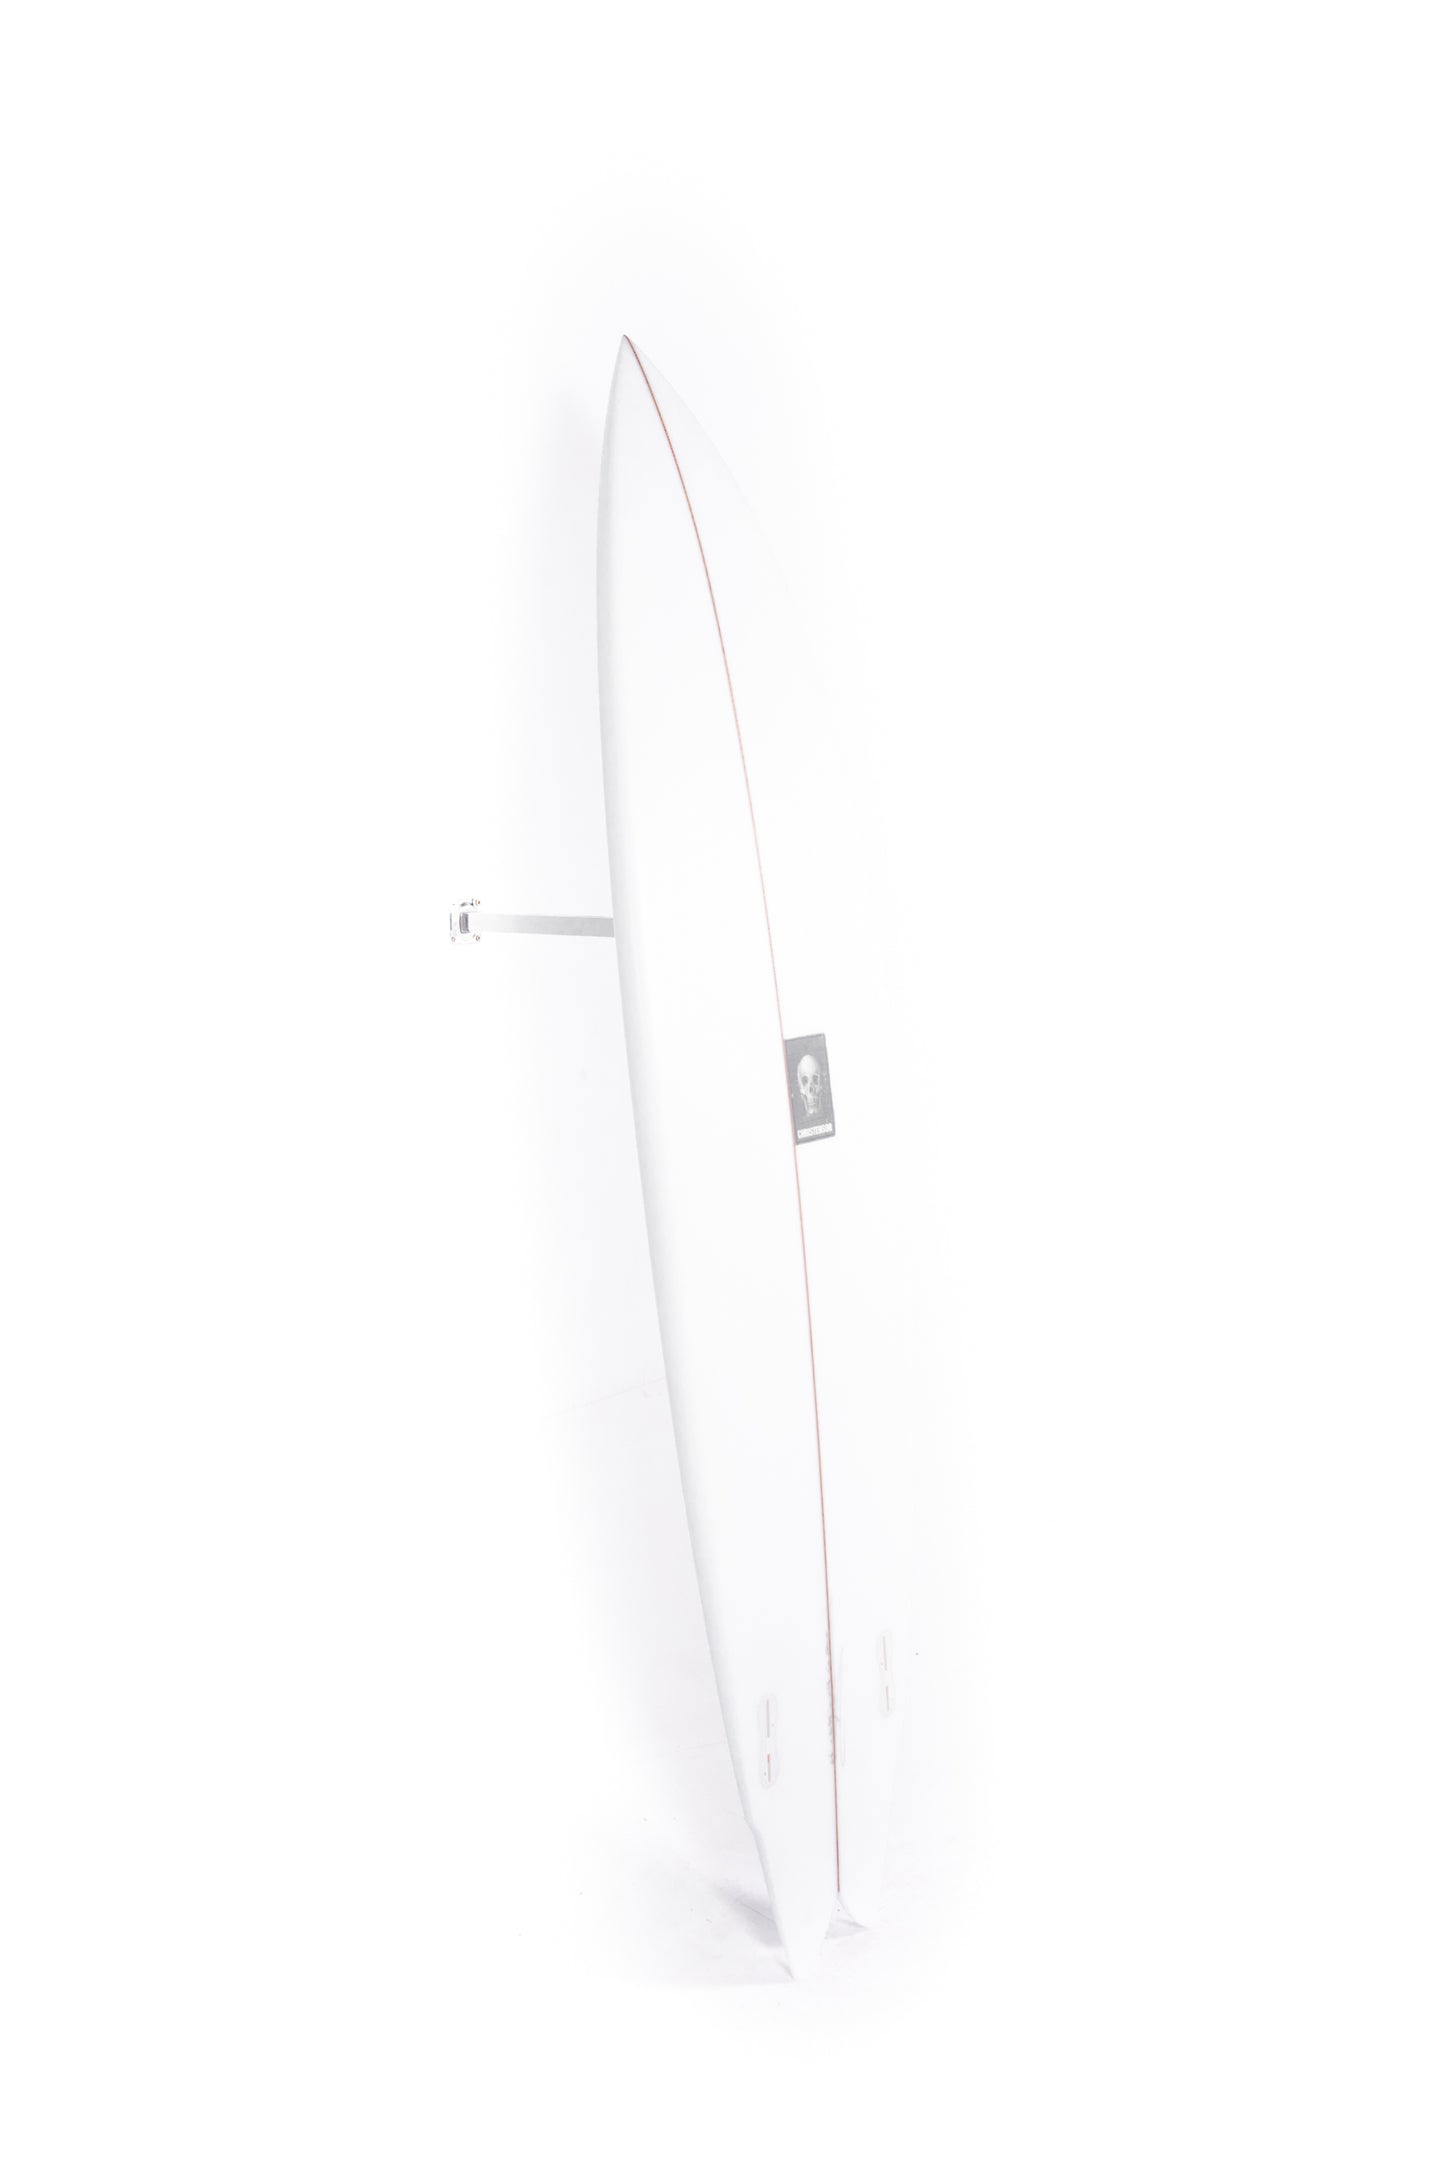 
                  
                    Pukas Surf Shop - Christenson Surfboard  - WOLVERINE by Chris Christenson - 6’6 x 20 3/4 x 2 5/8 x 39,42L - CX05800
                  
                